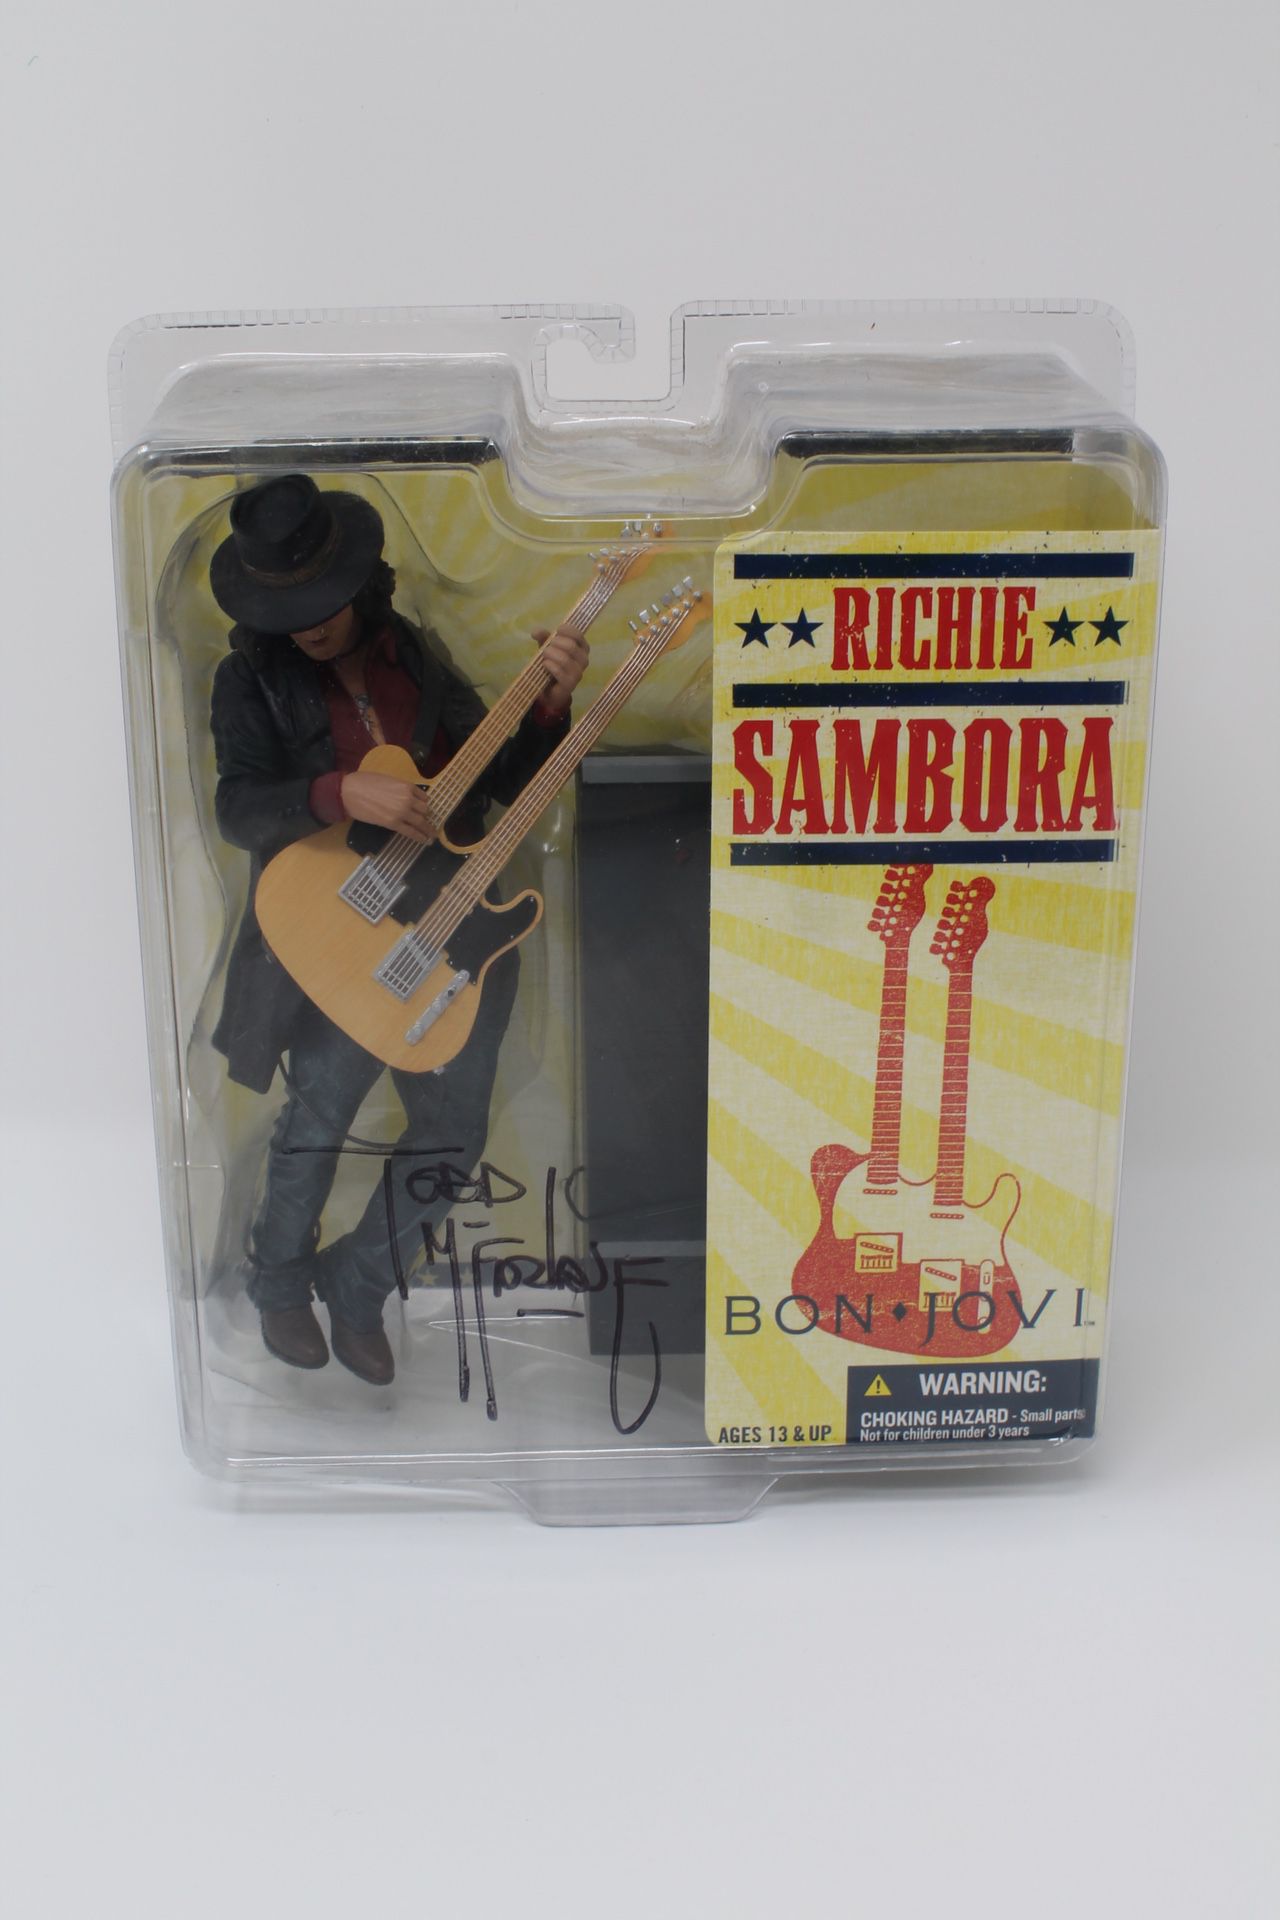 Richie Sambora collectible statue, autographed by Todd McFarlane